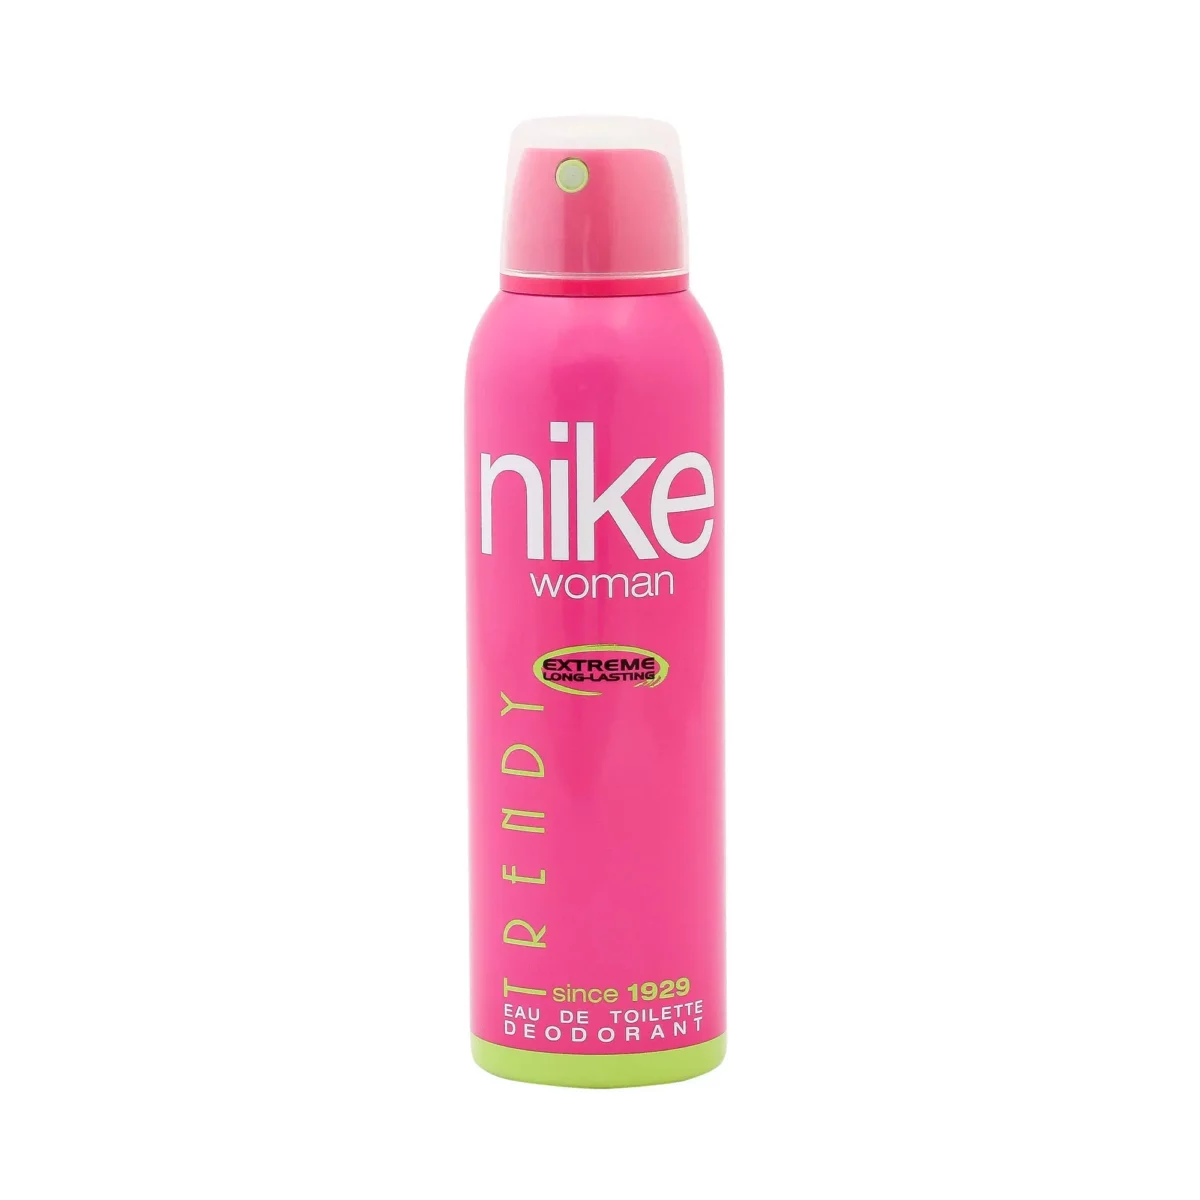 Nike Trendy Deodorant Spray For Woman 200ml